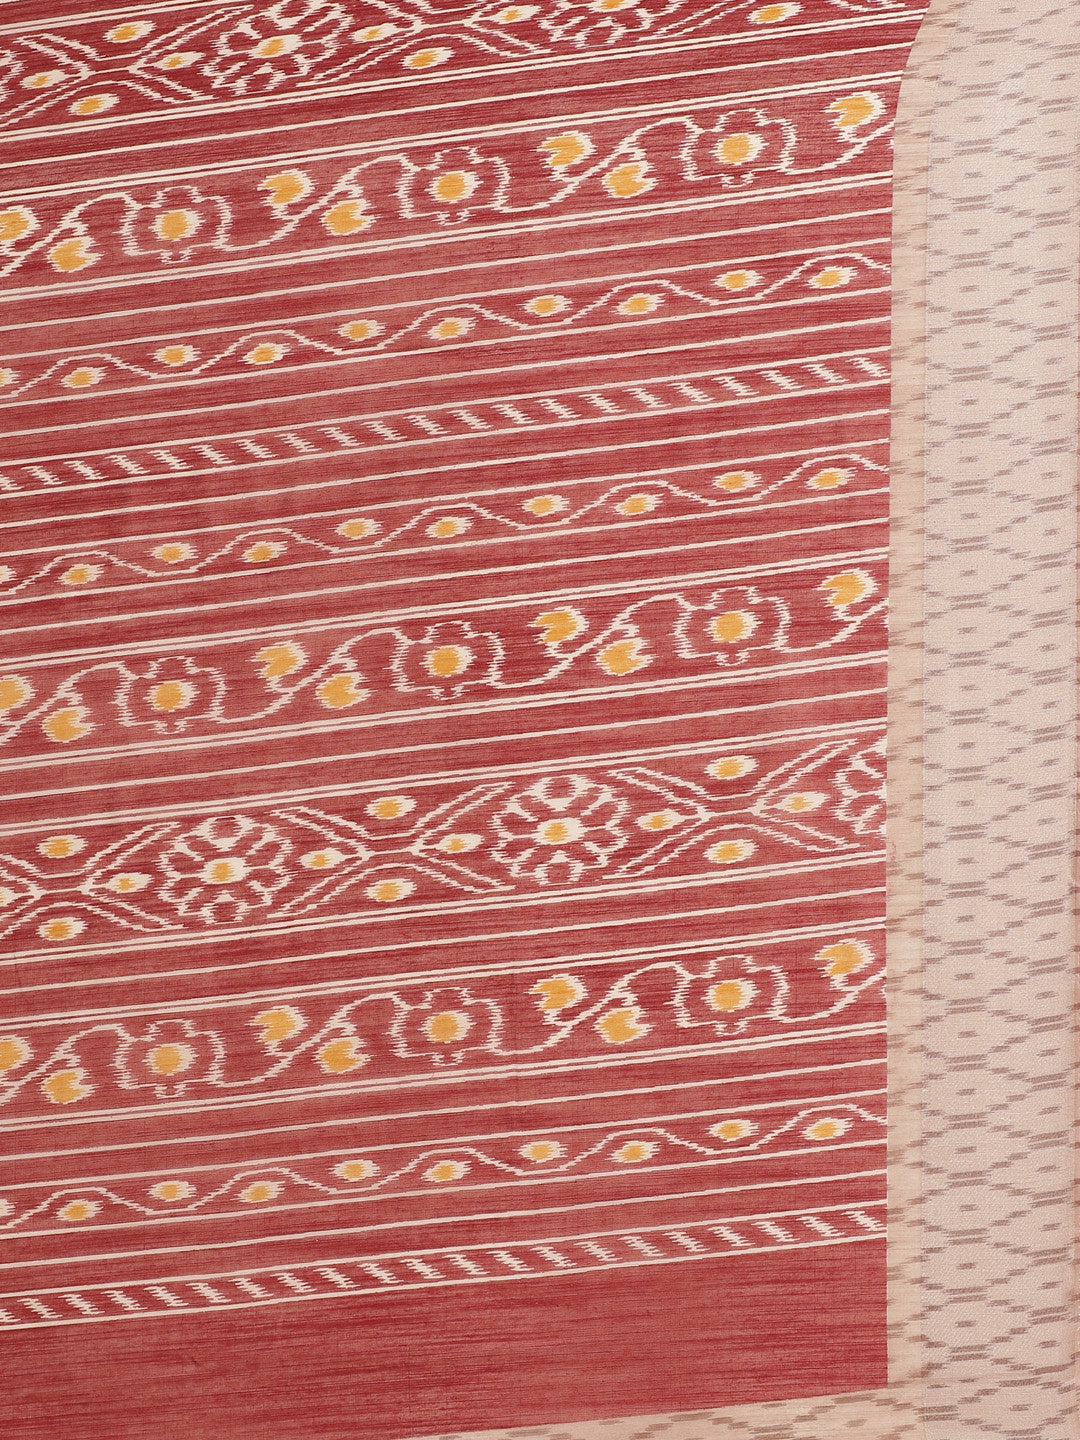 Women's Maroon Cotton Blend Printed Saree - Ahika